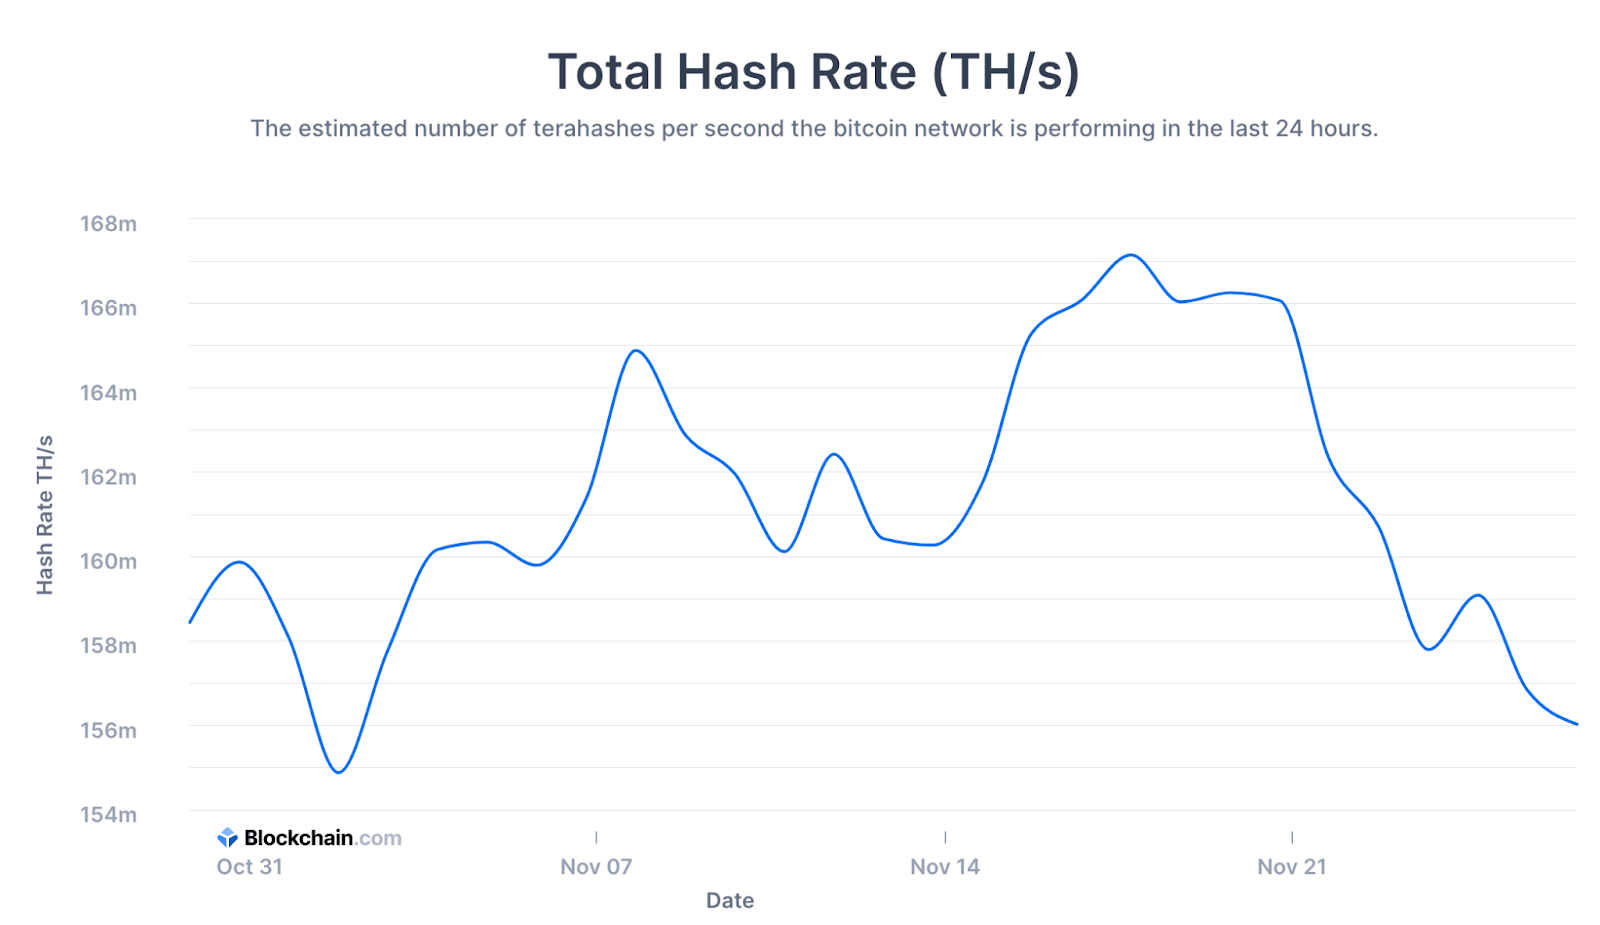 Bitcoin Total Hash Rate (TH/s) last 30 days, Source: Blockchain.com